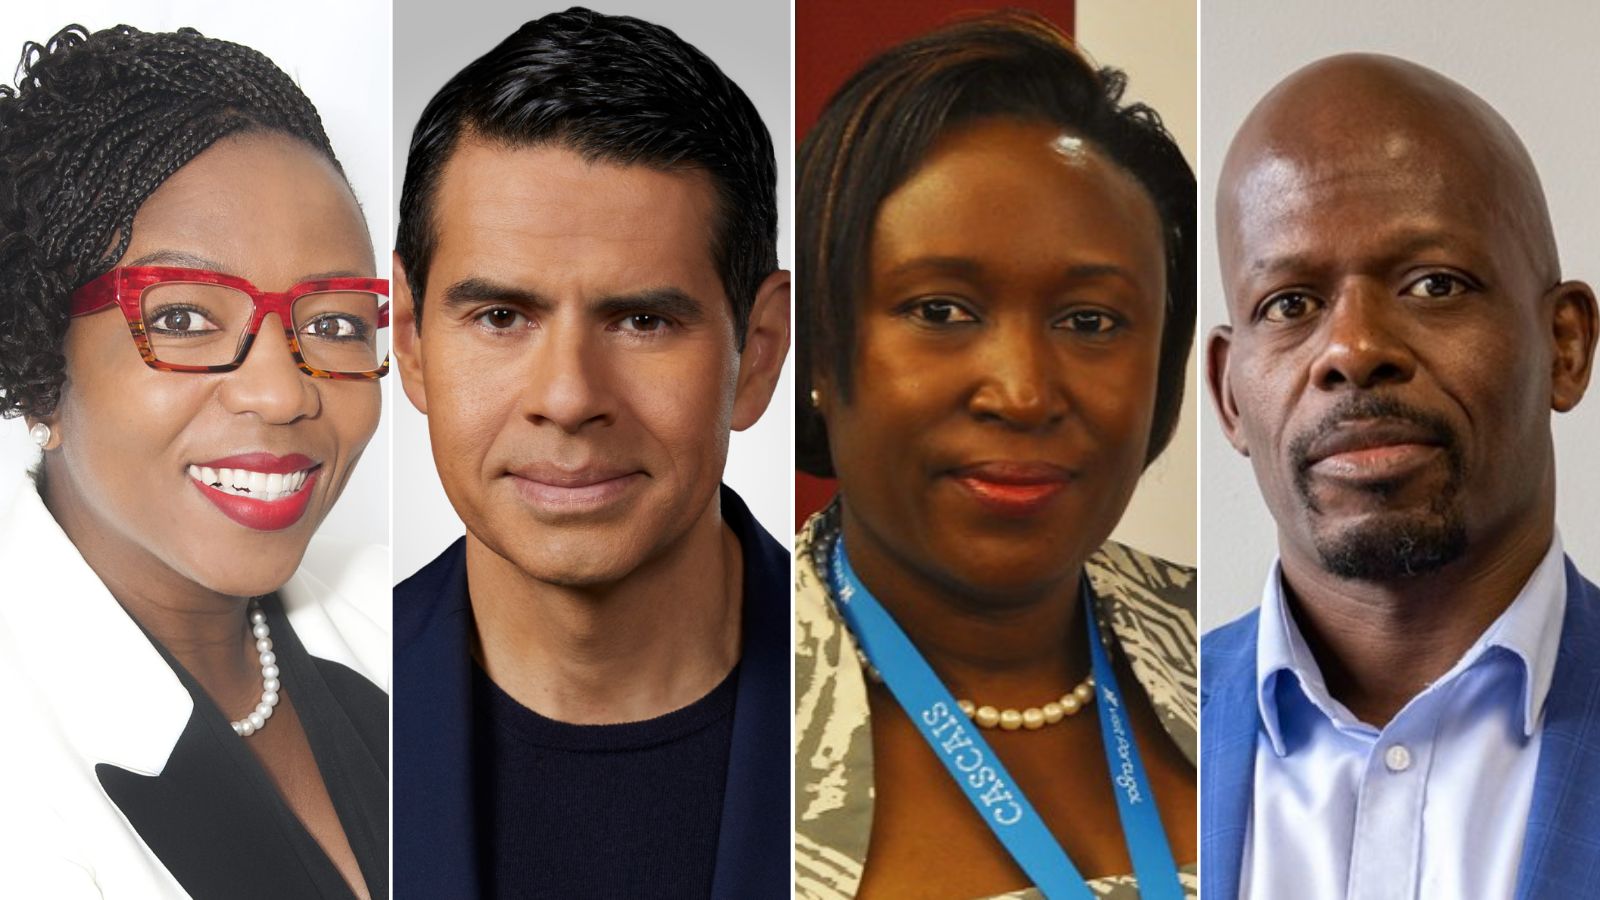 Nada Wothsela, SABC Radio; Cesar Conde, NBC/MSNBC News; Pamela Sittoni, Daily Nation; Njanji Chauke, Newzroom Afrika